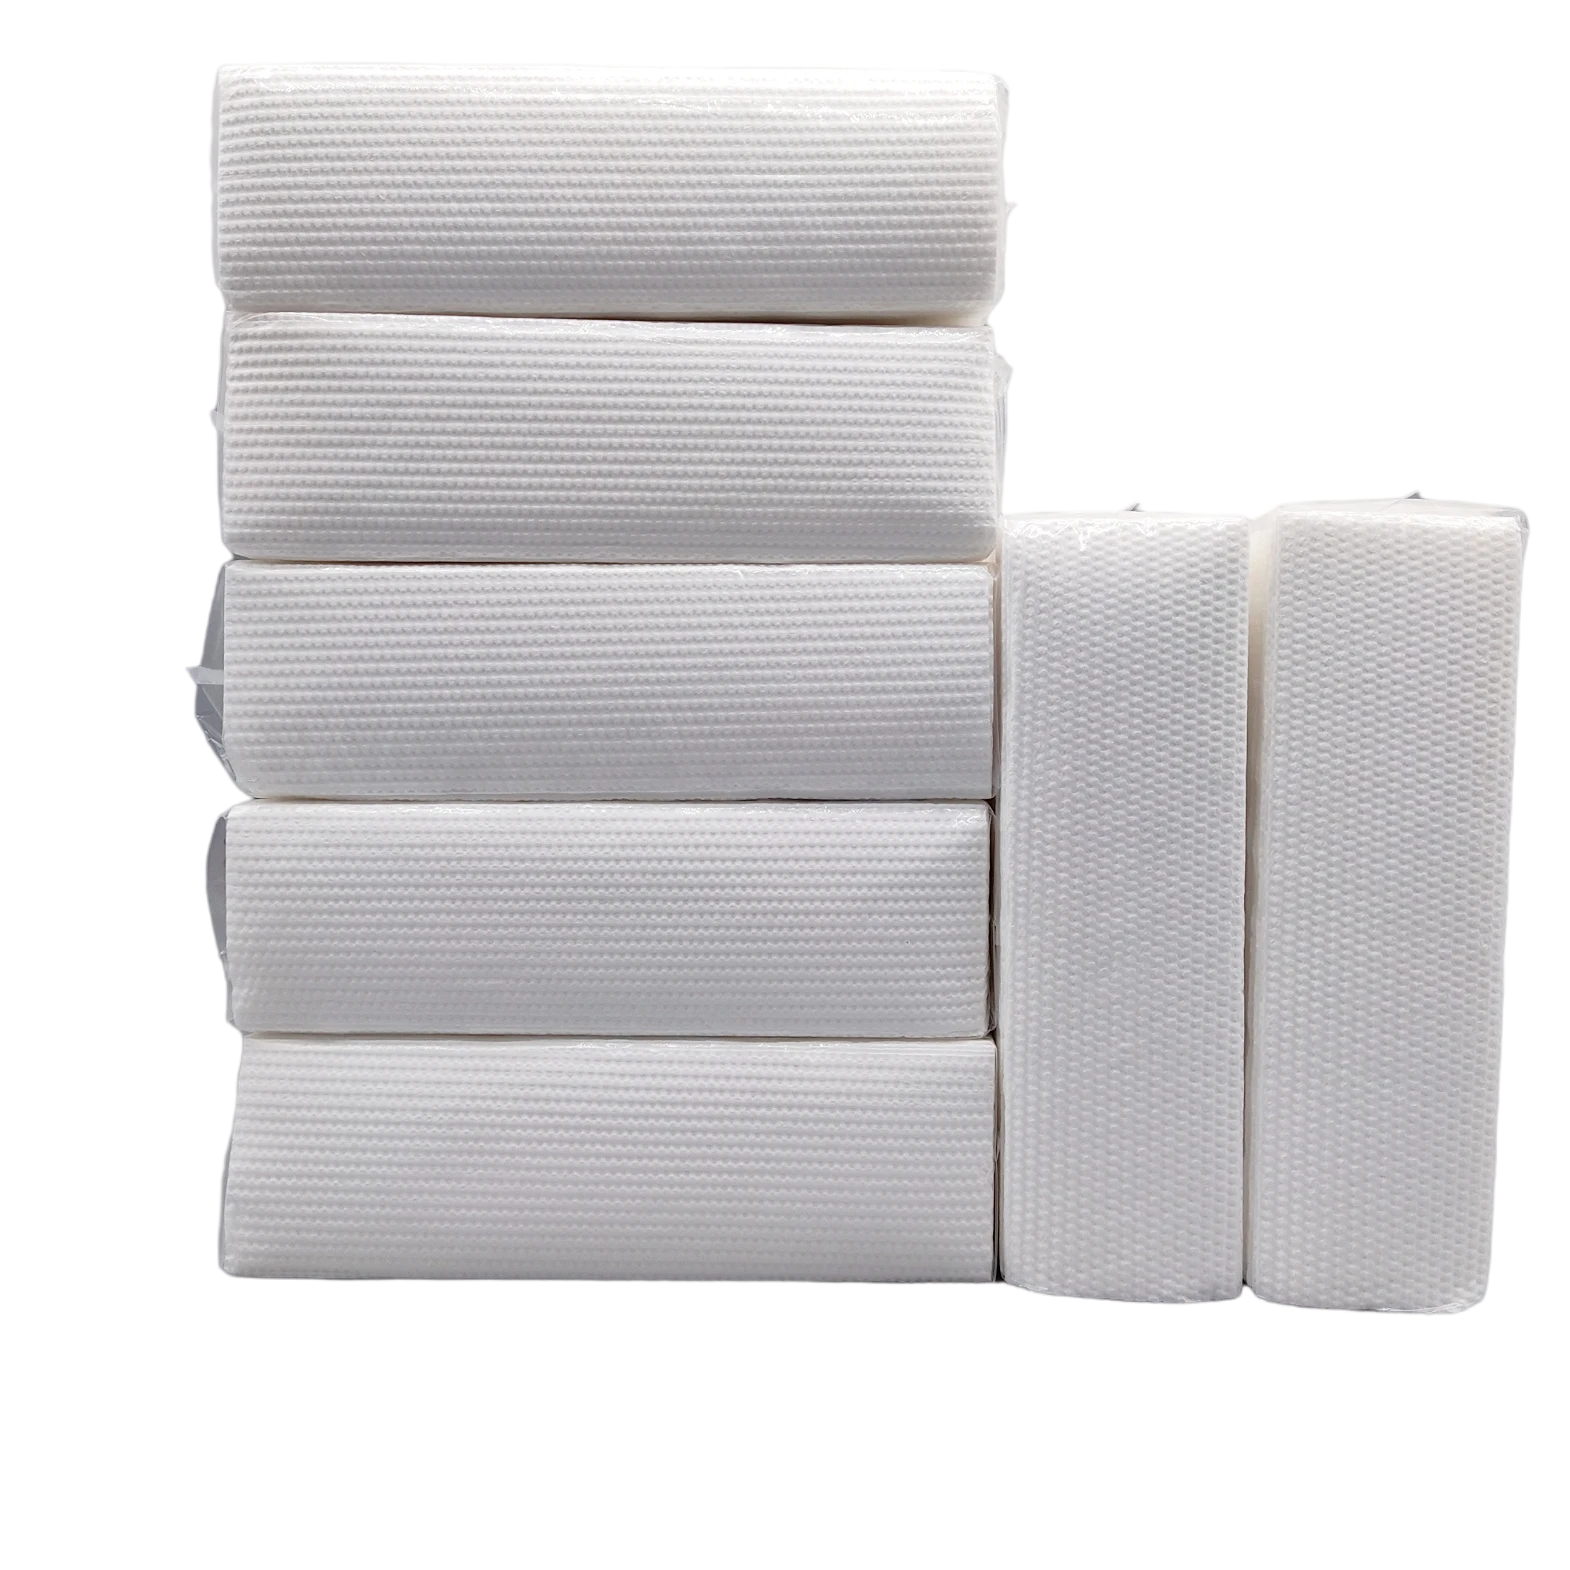 Manufacturing sell cheap hand paper towel N fold towel virgin wood pulp